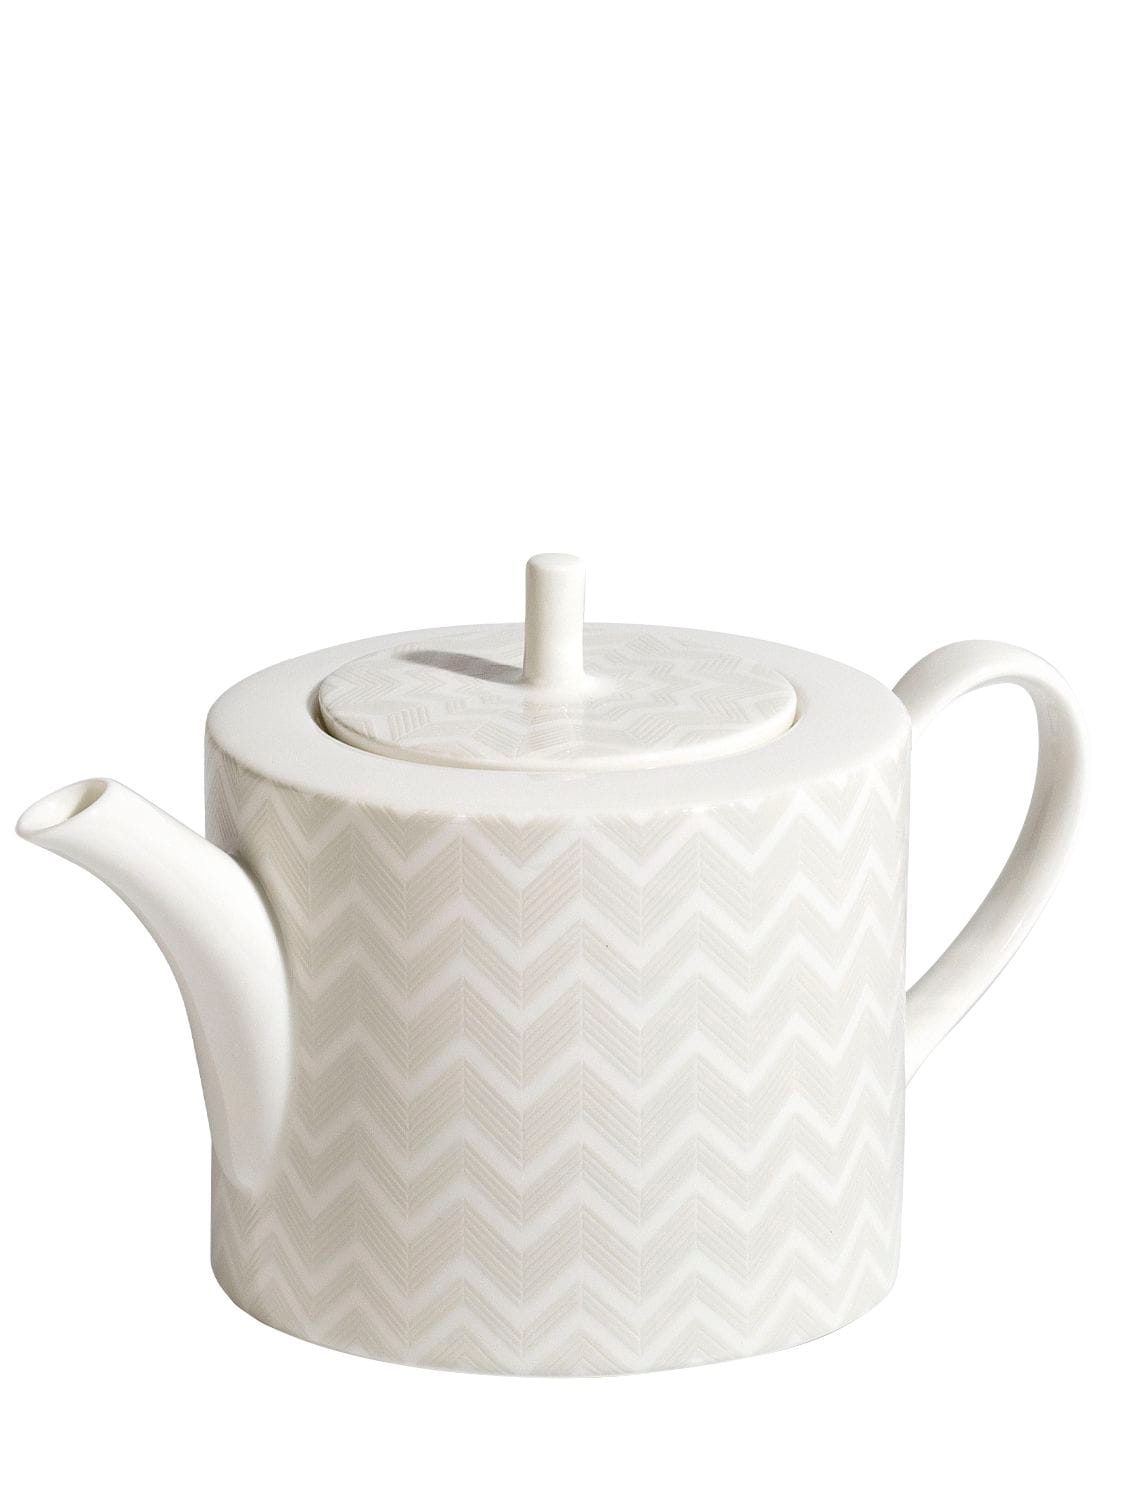 Missoni Home Collection Zig Zag White Tea Pot Coffee Pot